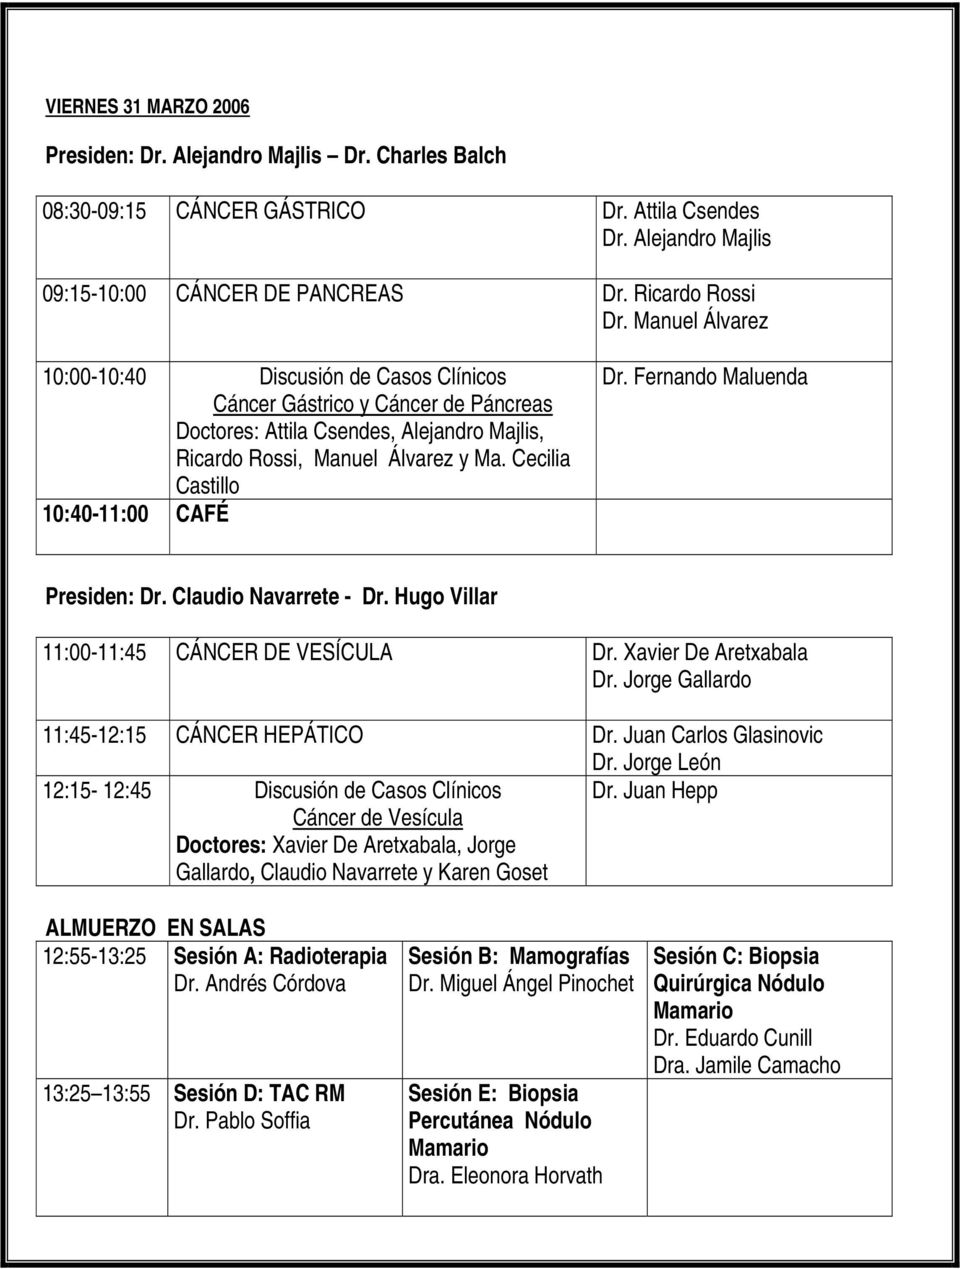 Cecilia Castillo 10:40-11:00 CAFÉ Dr. Fernando Maluenda Presiden: Dr. Claudio Navarrete - Dr. Hugo Villar 11:00-11:45 CÁNCER DE VESÍCULA Dr. Xavier De Aretxabala Dr.